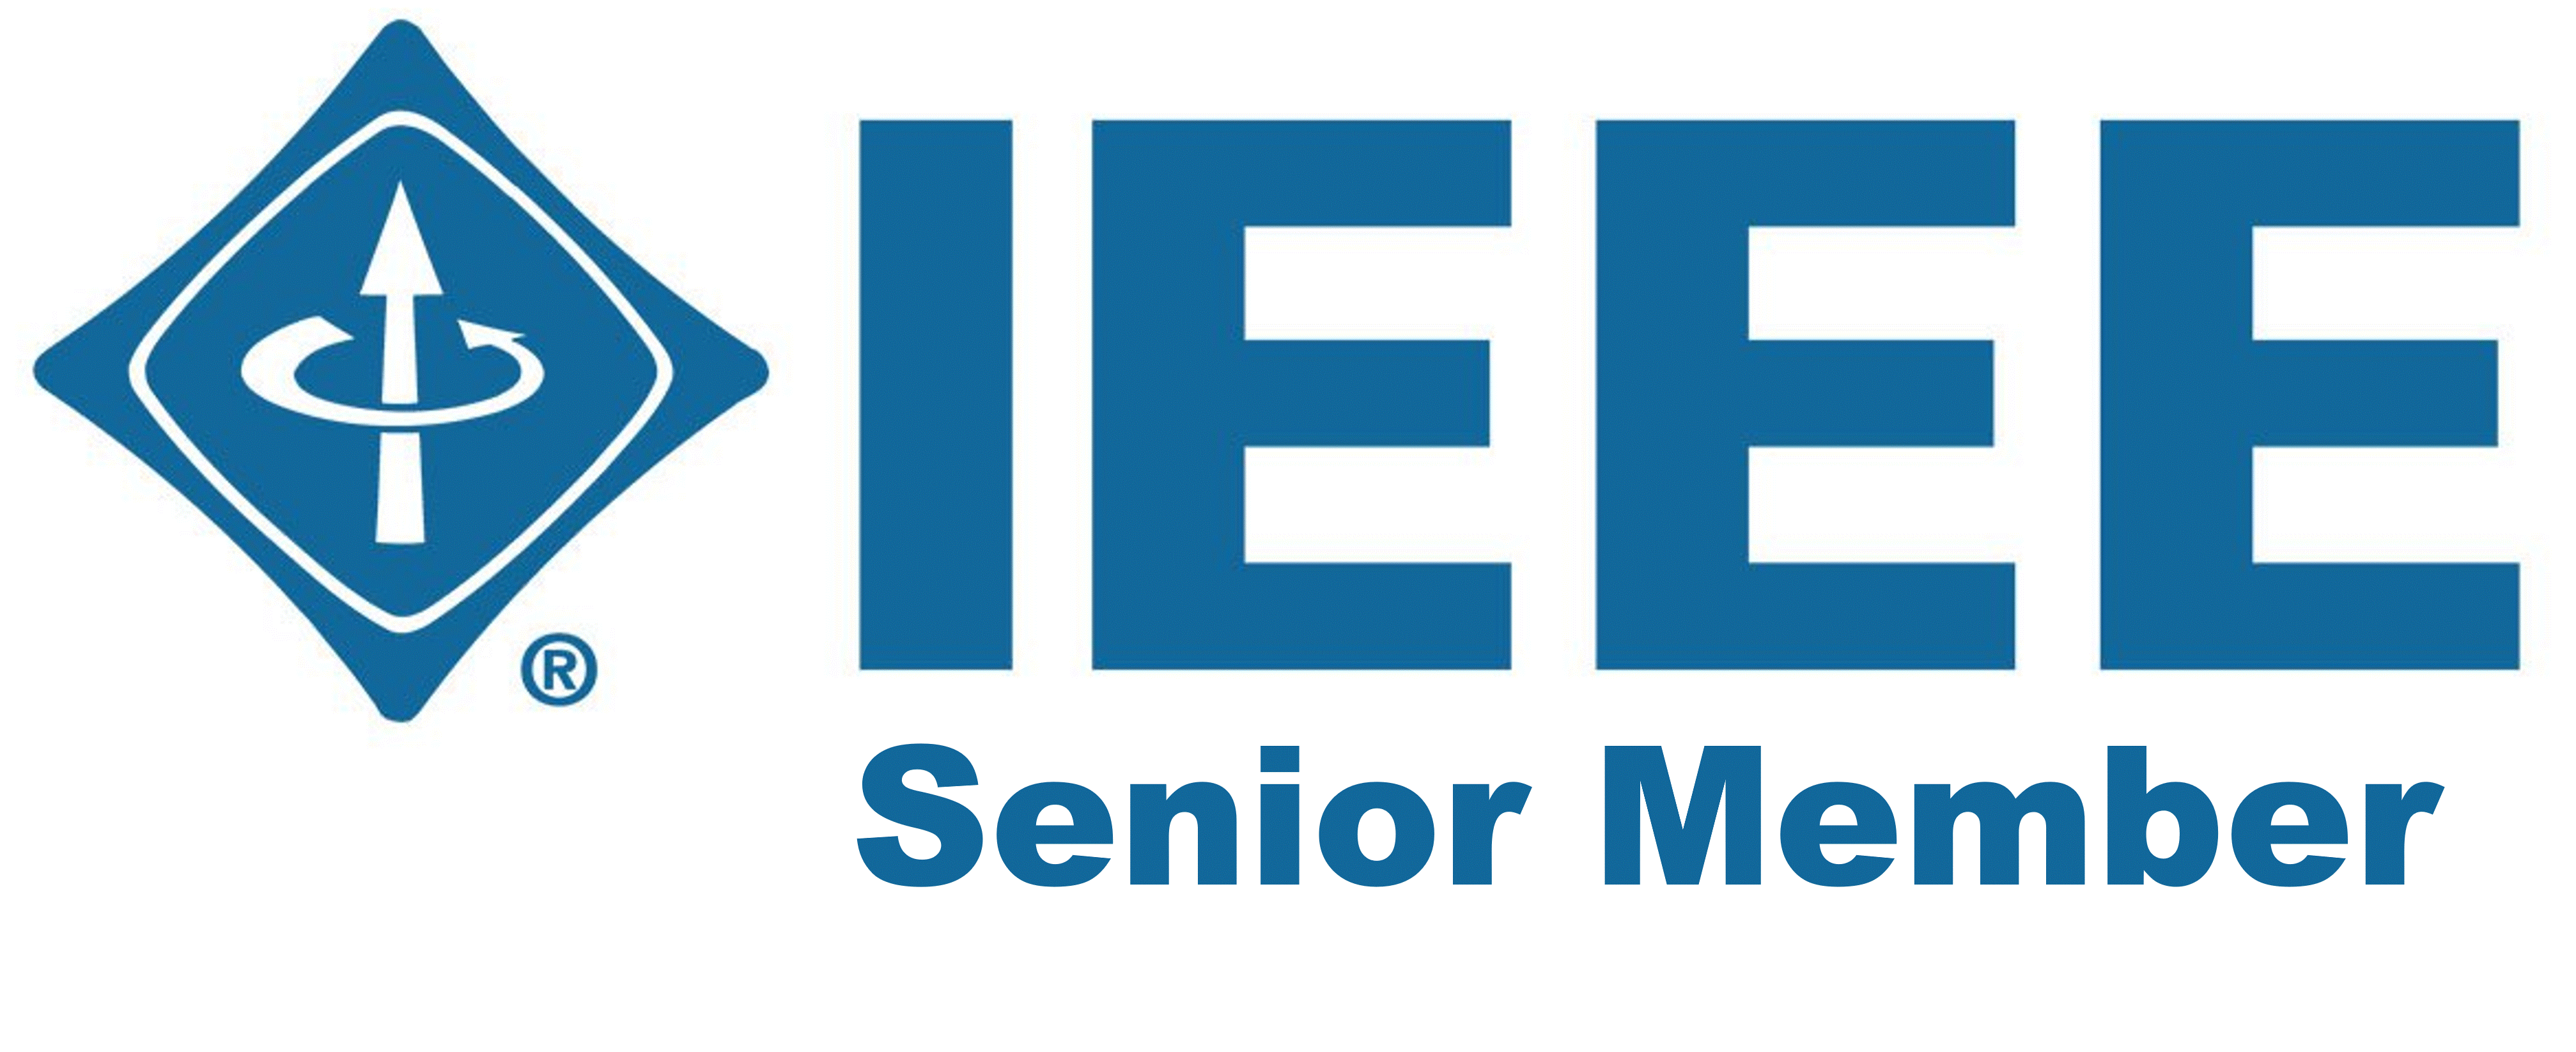 IEEE senior member logo